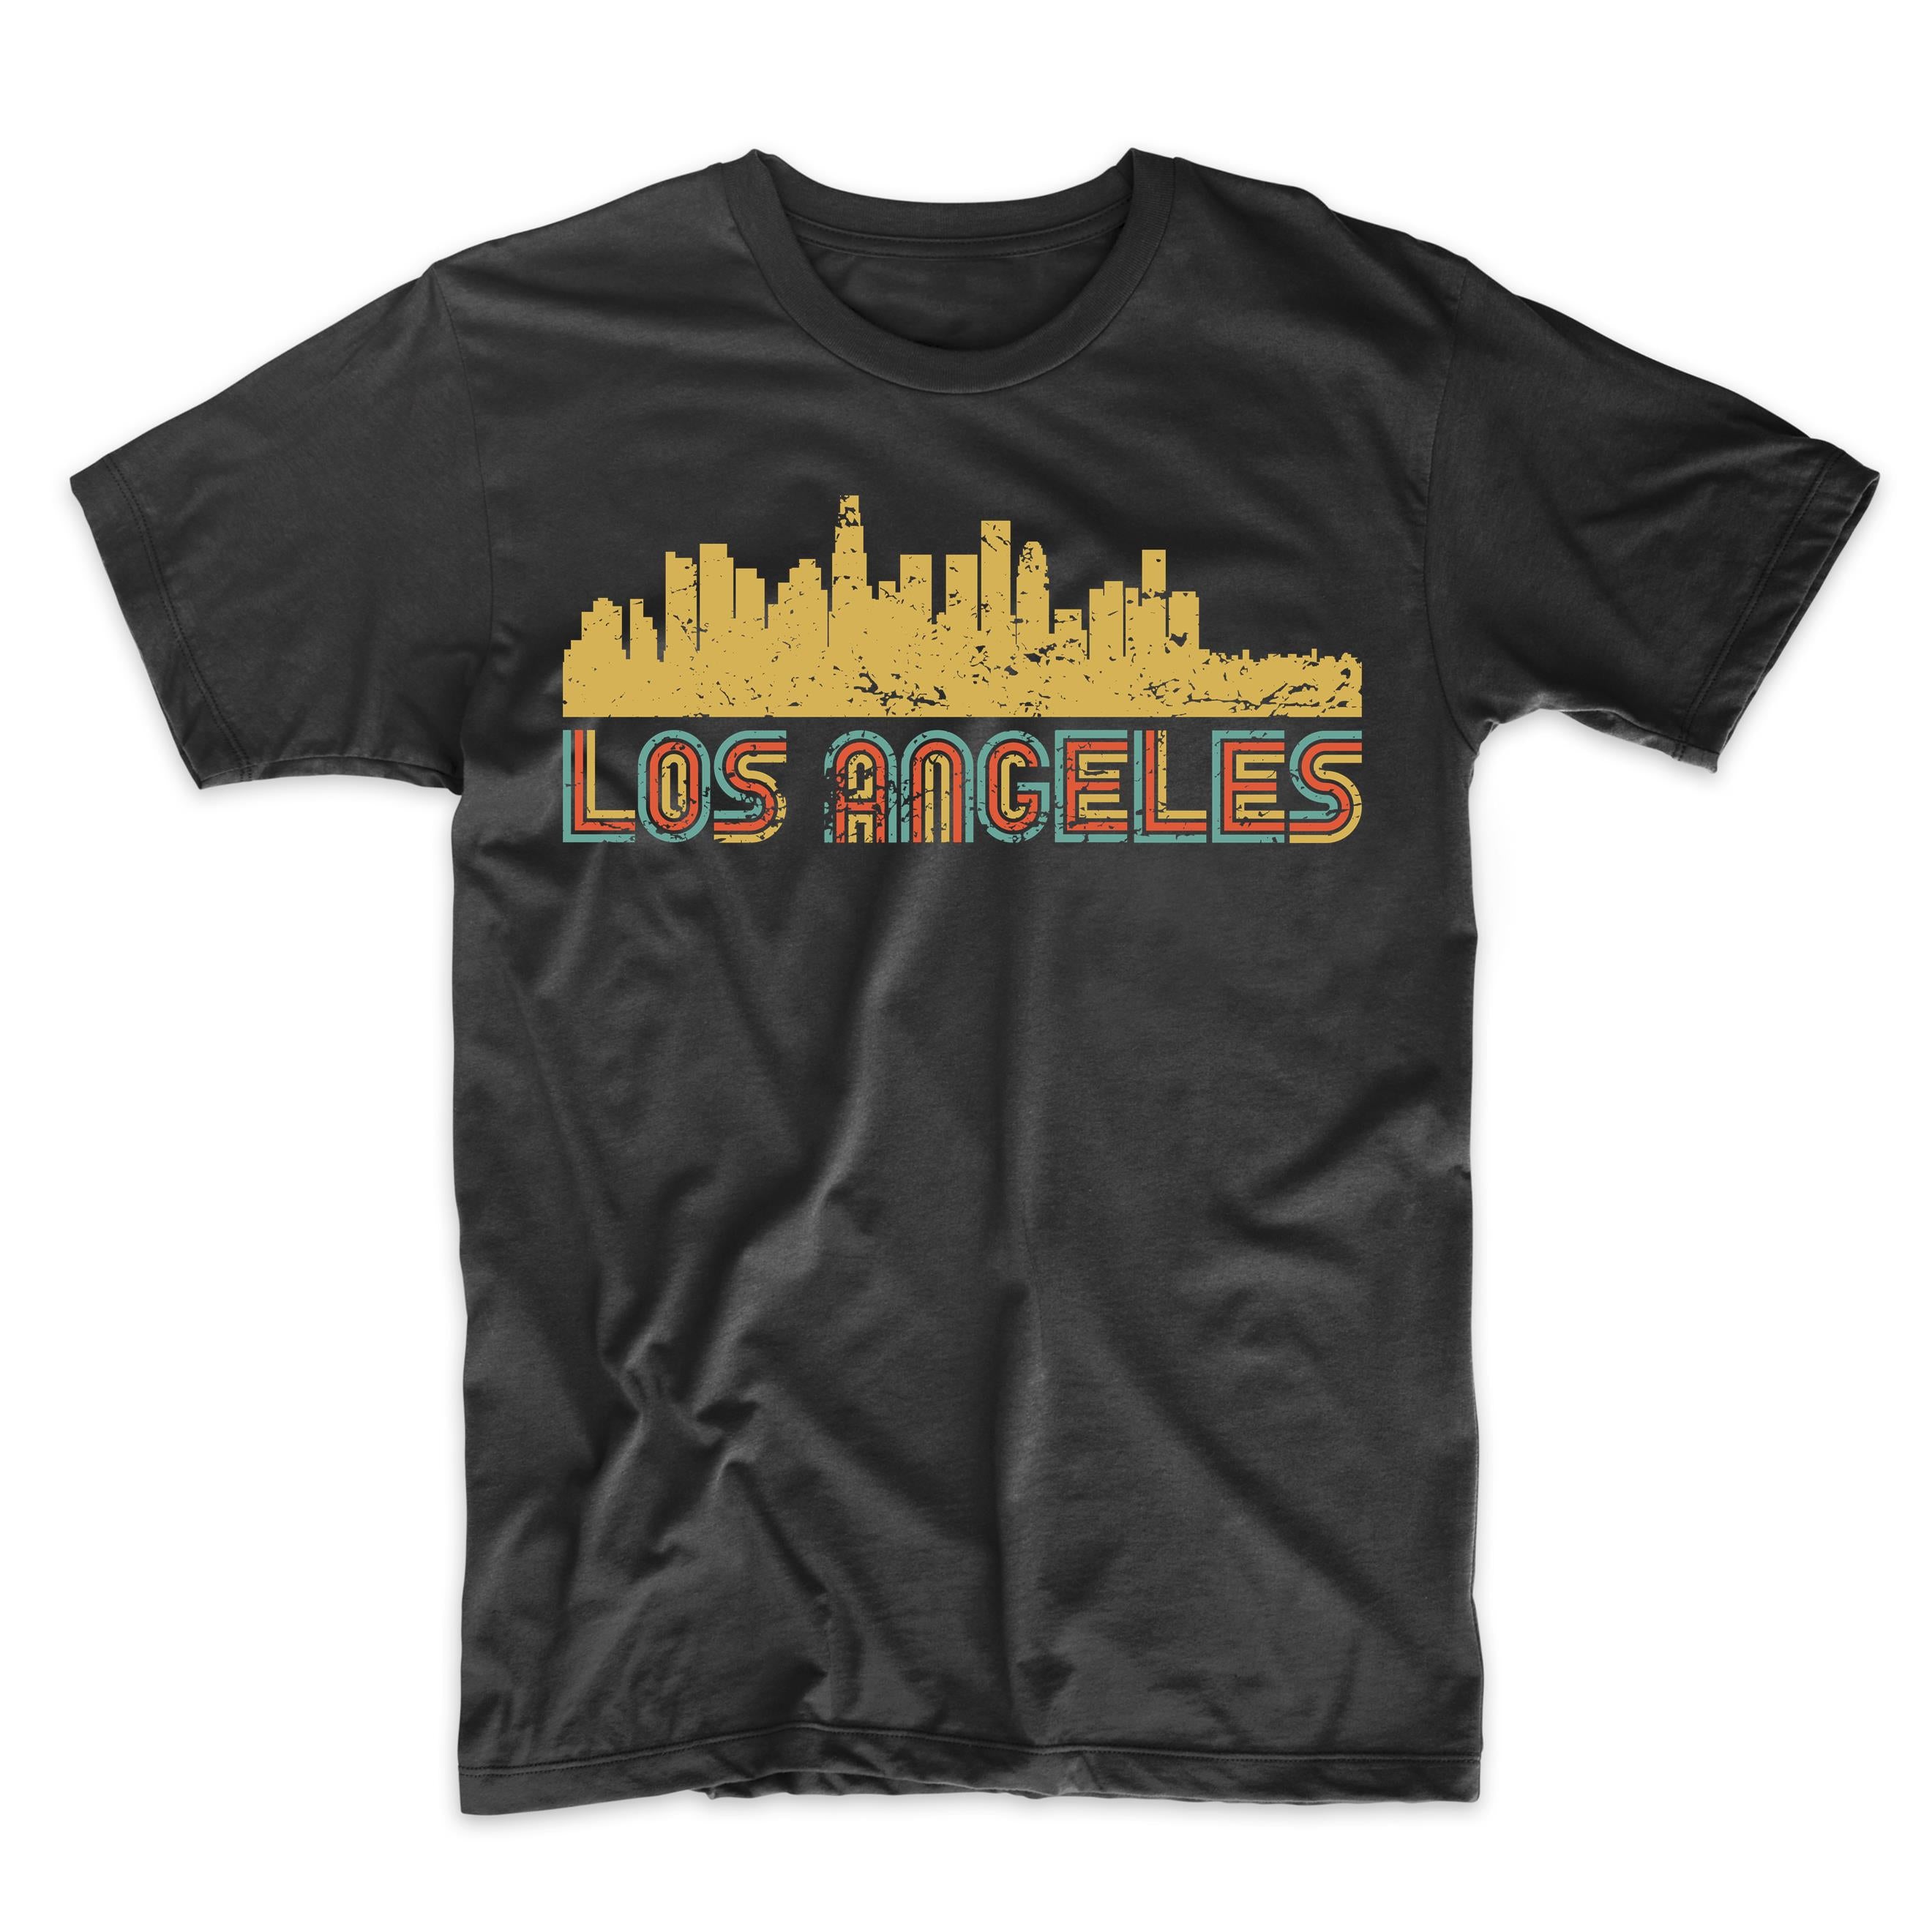 Los Angeles Shirt - Retro Vintage Style Los Angeles California Skyline ...